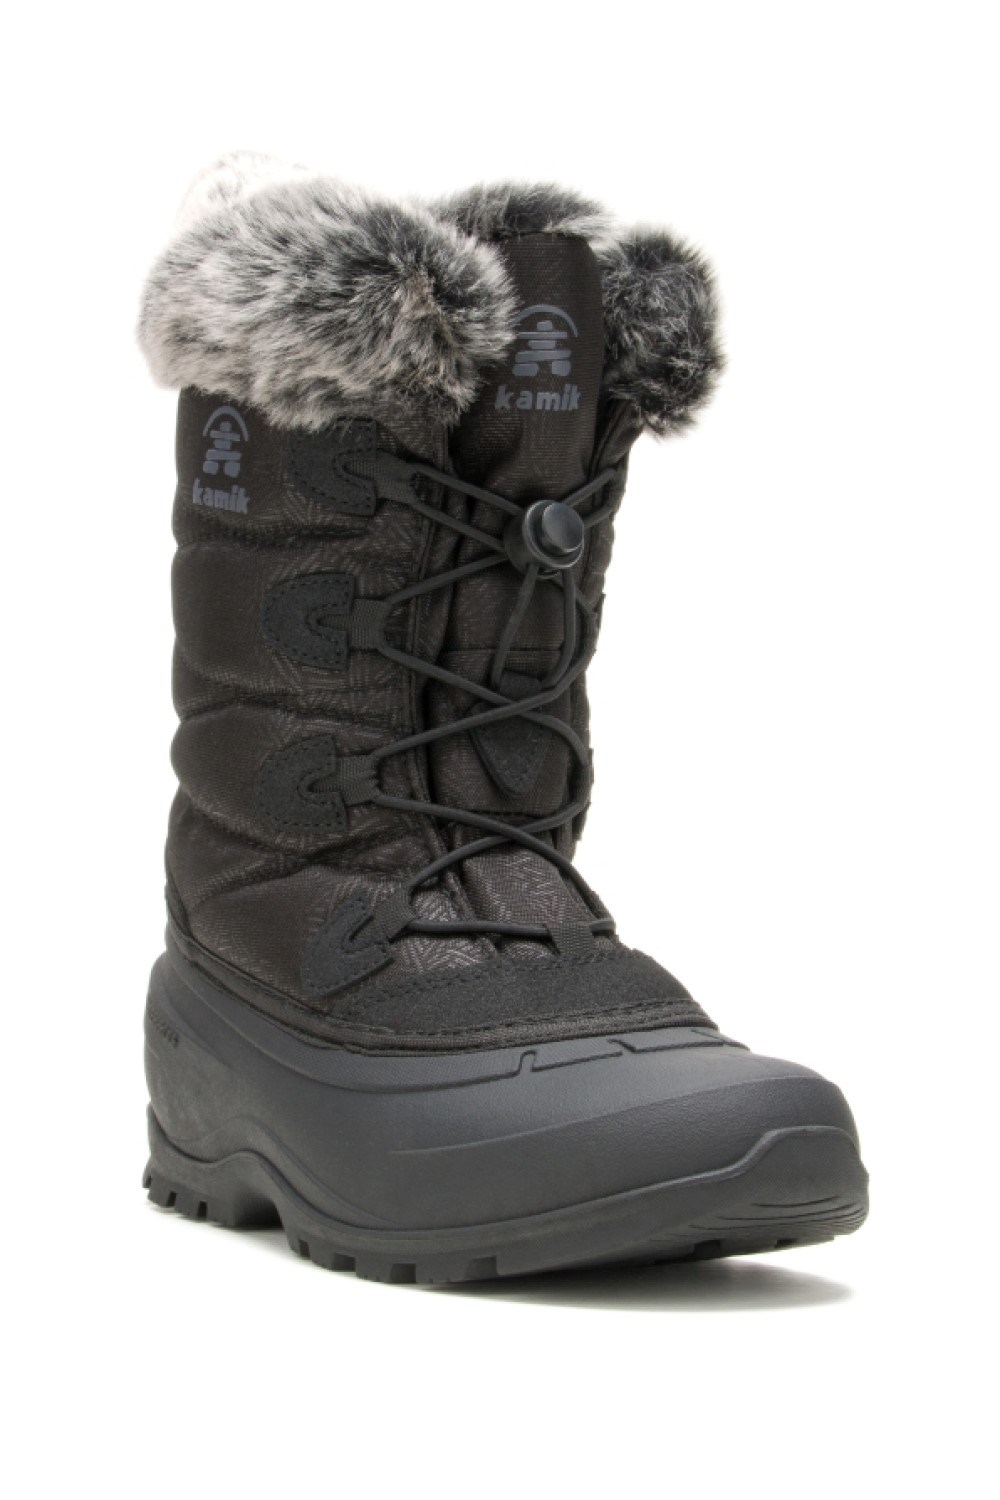 Momentum 3 Womens Snow Boots -